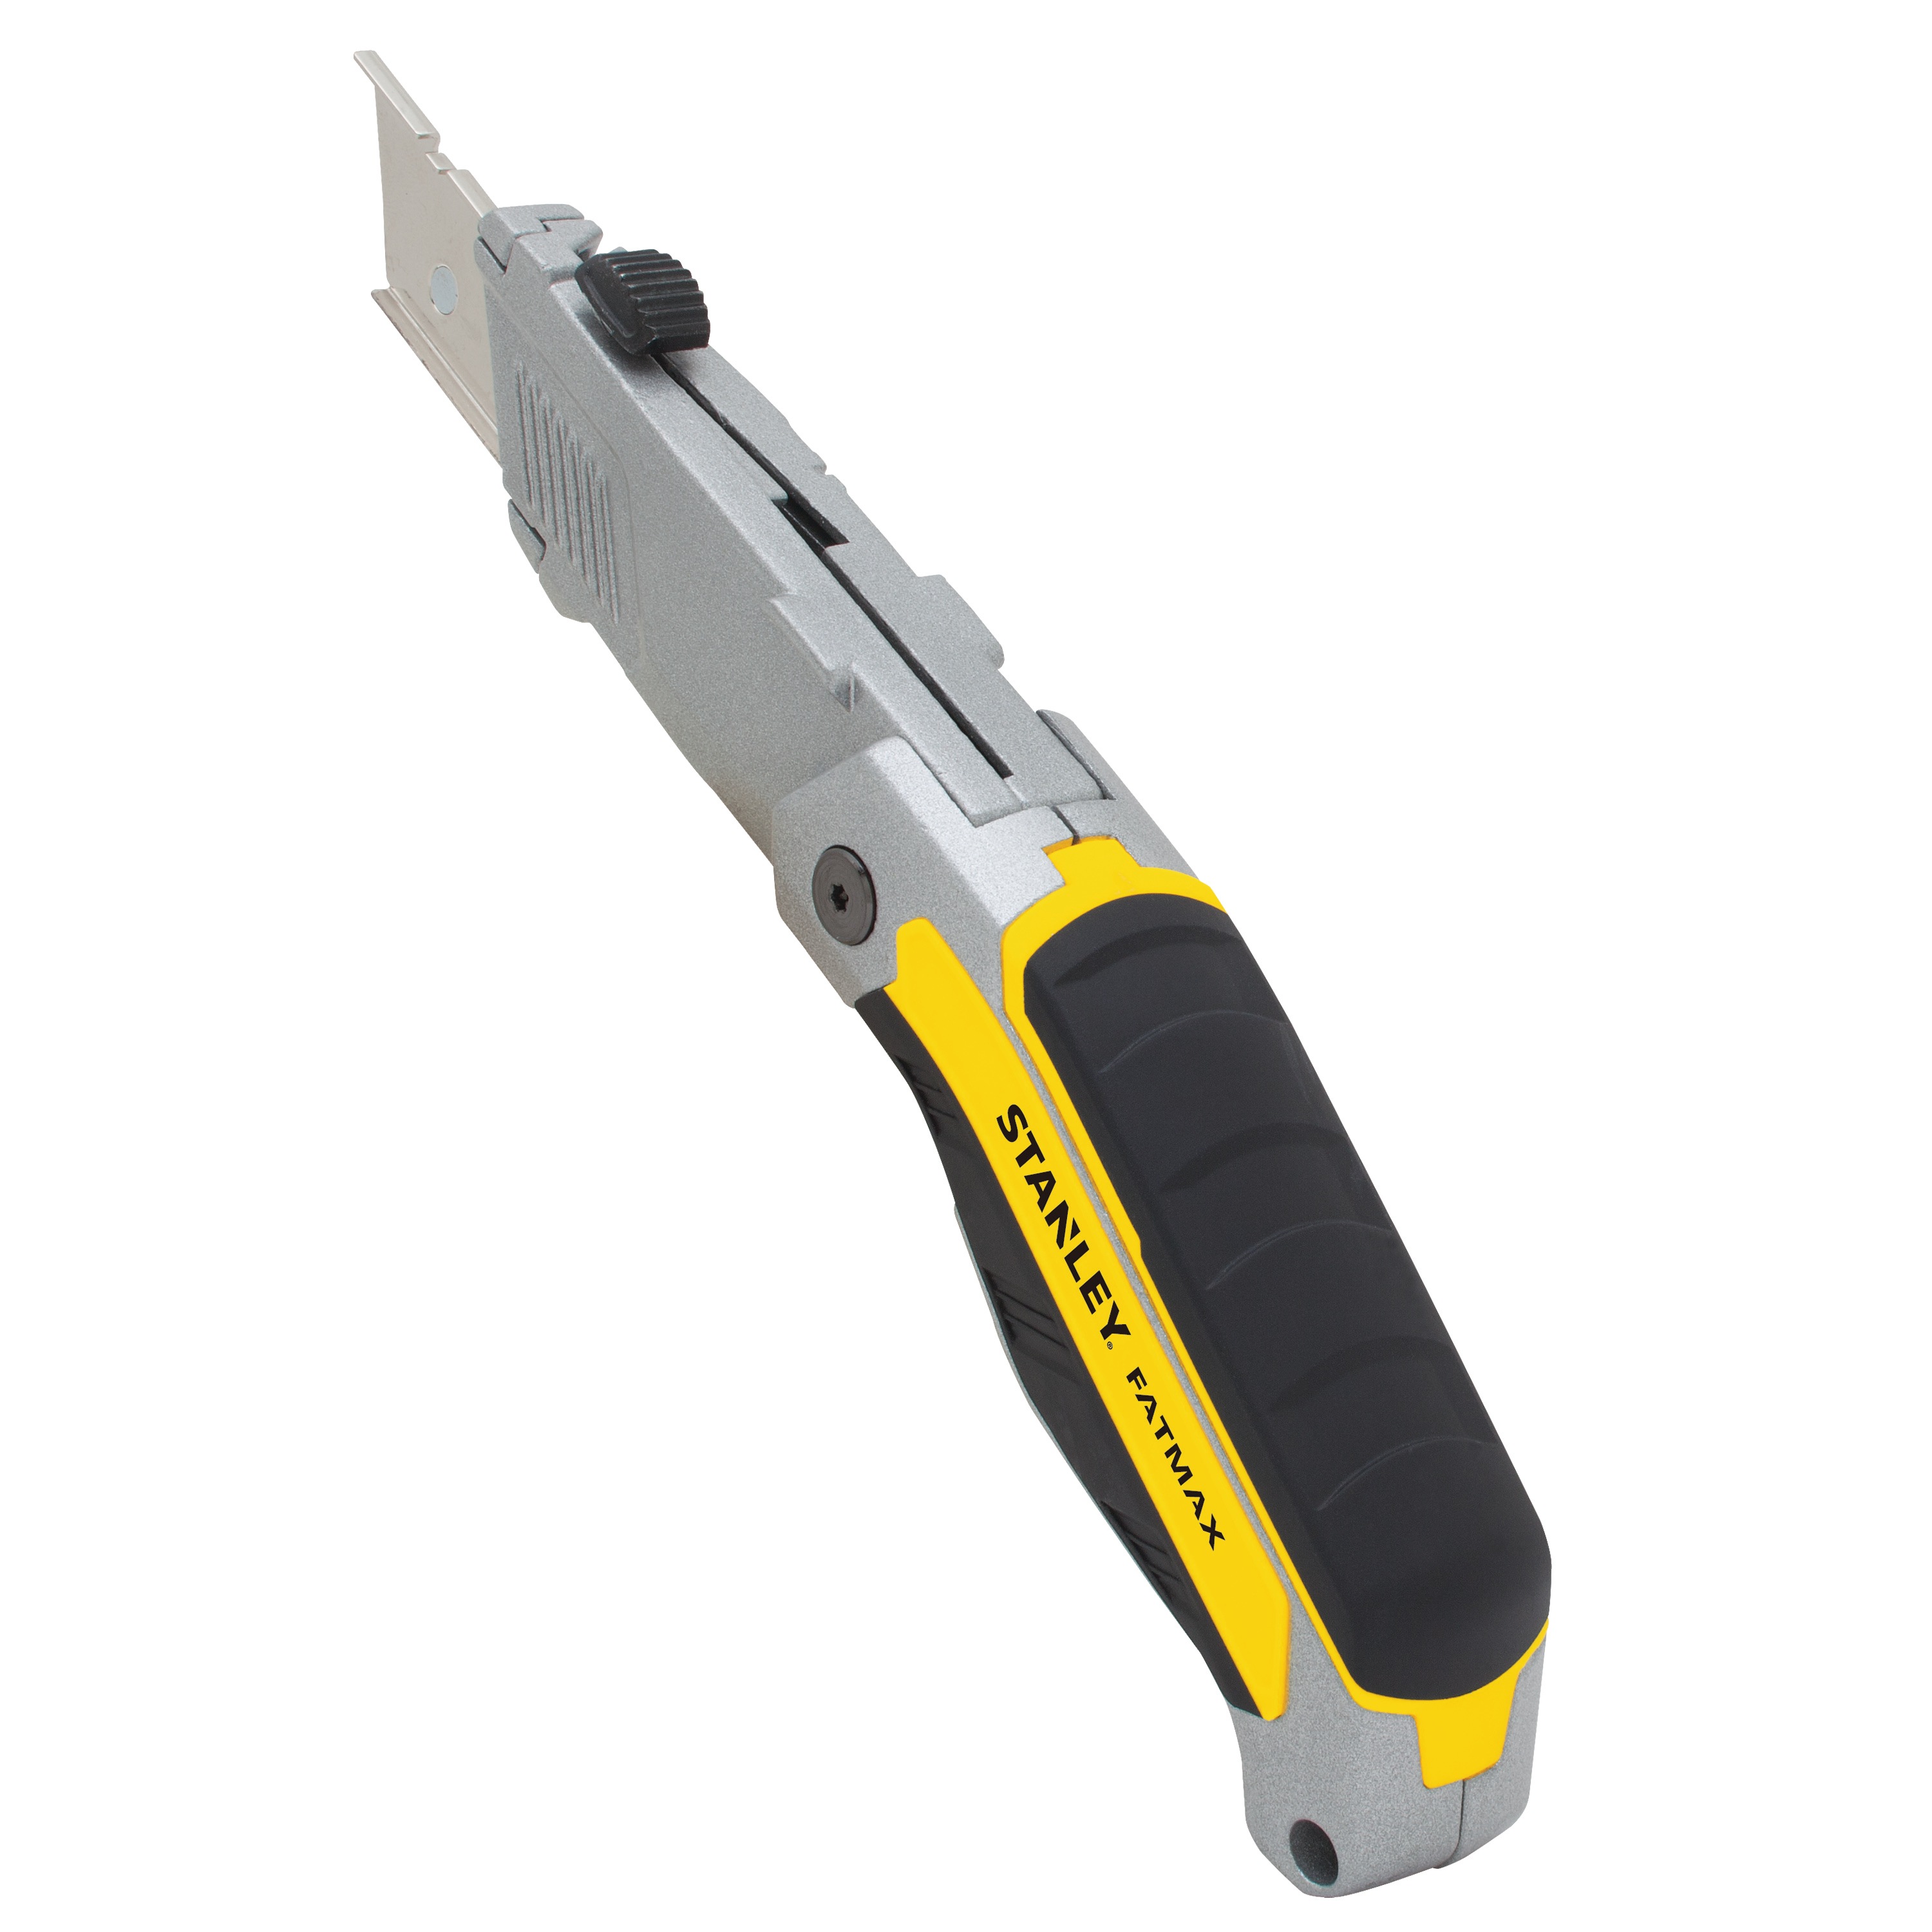 Stanley Tools - FATMAX ExoChange Folding Utility Knife - FMHT10289